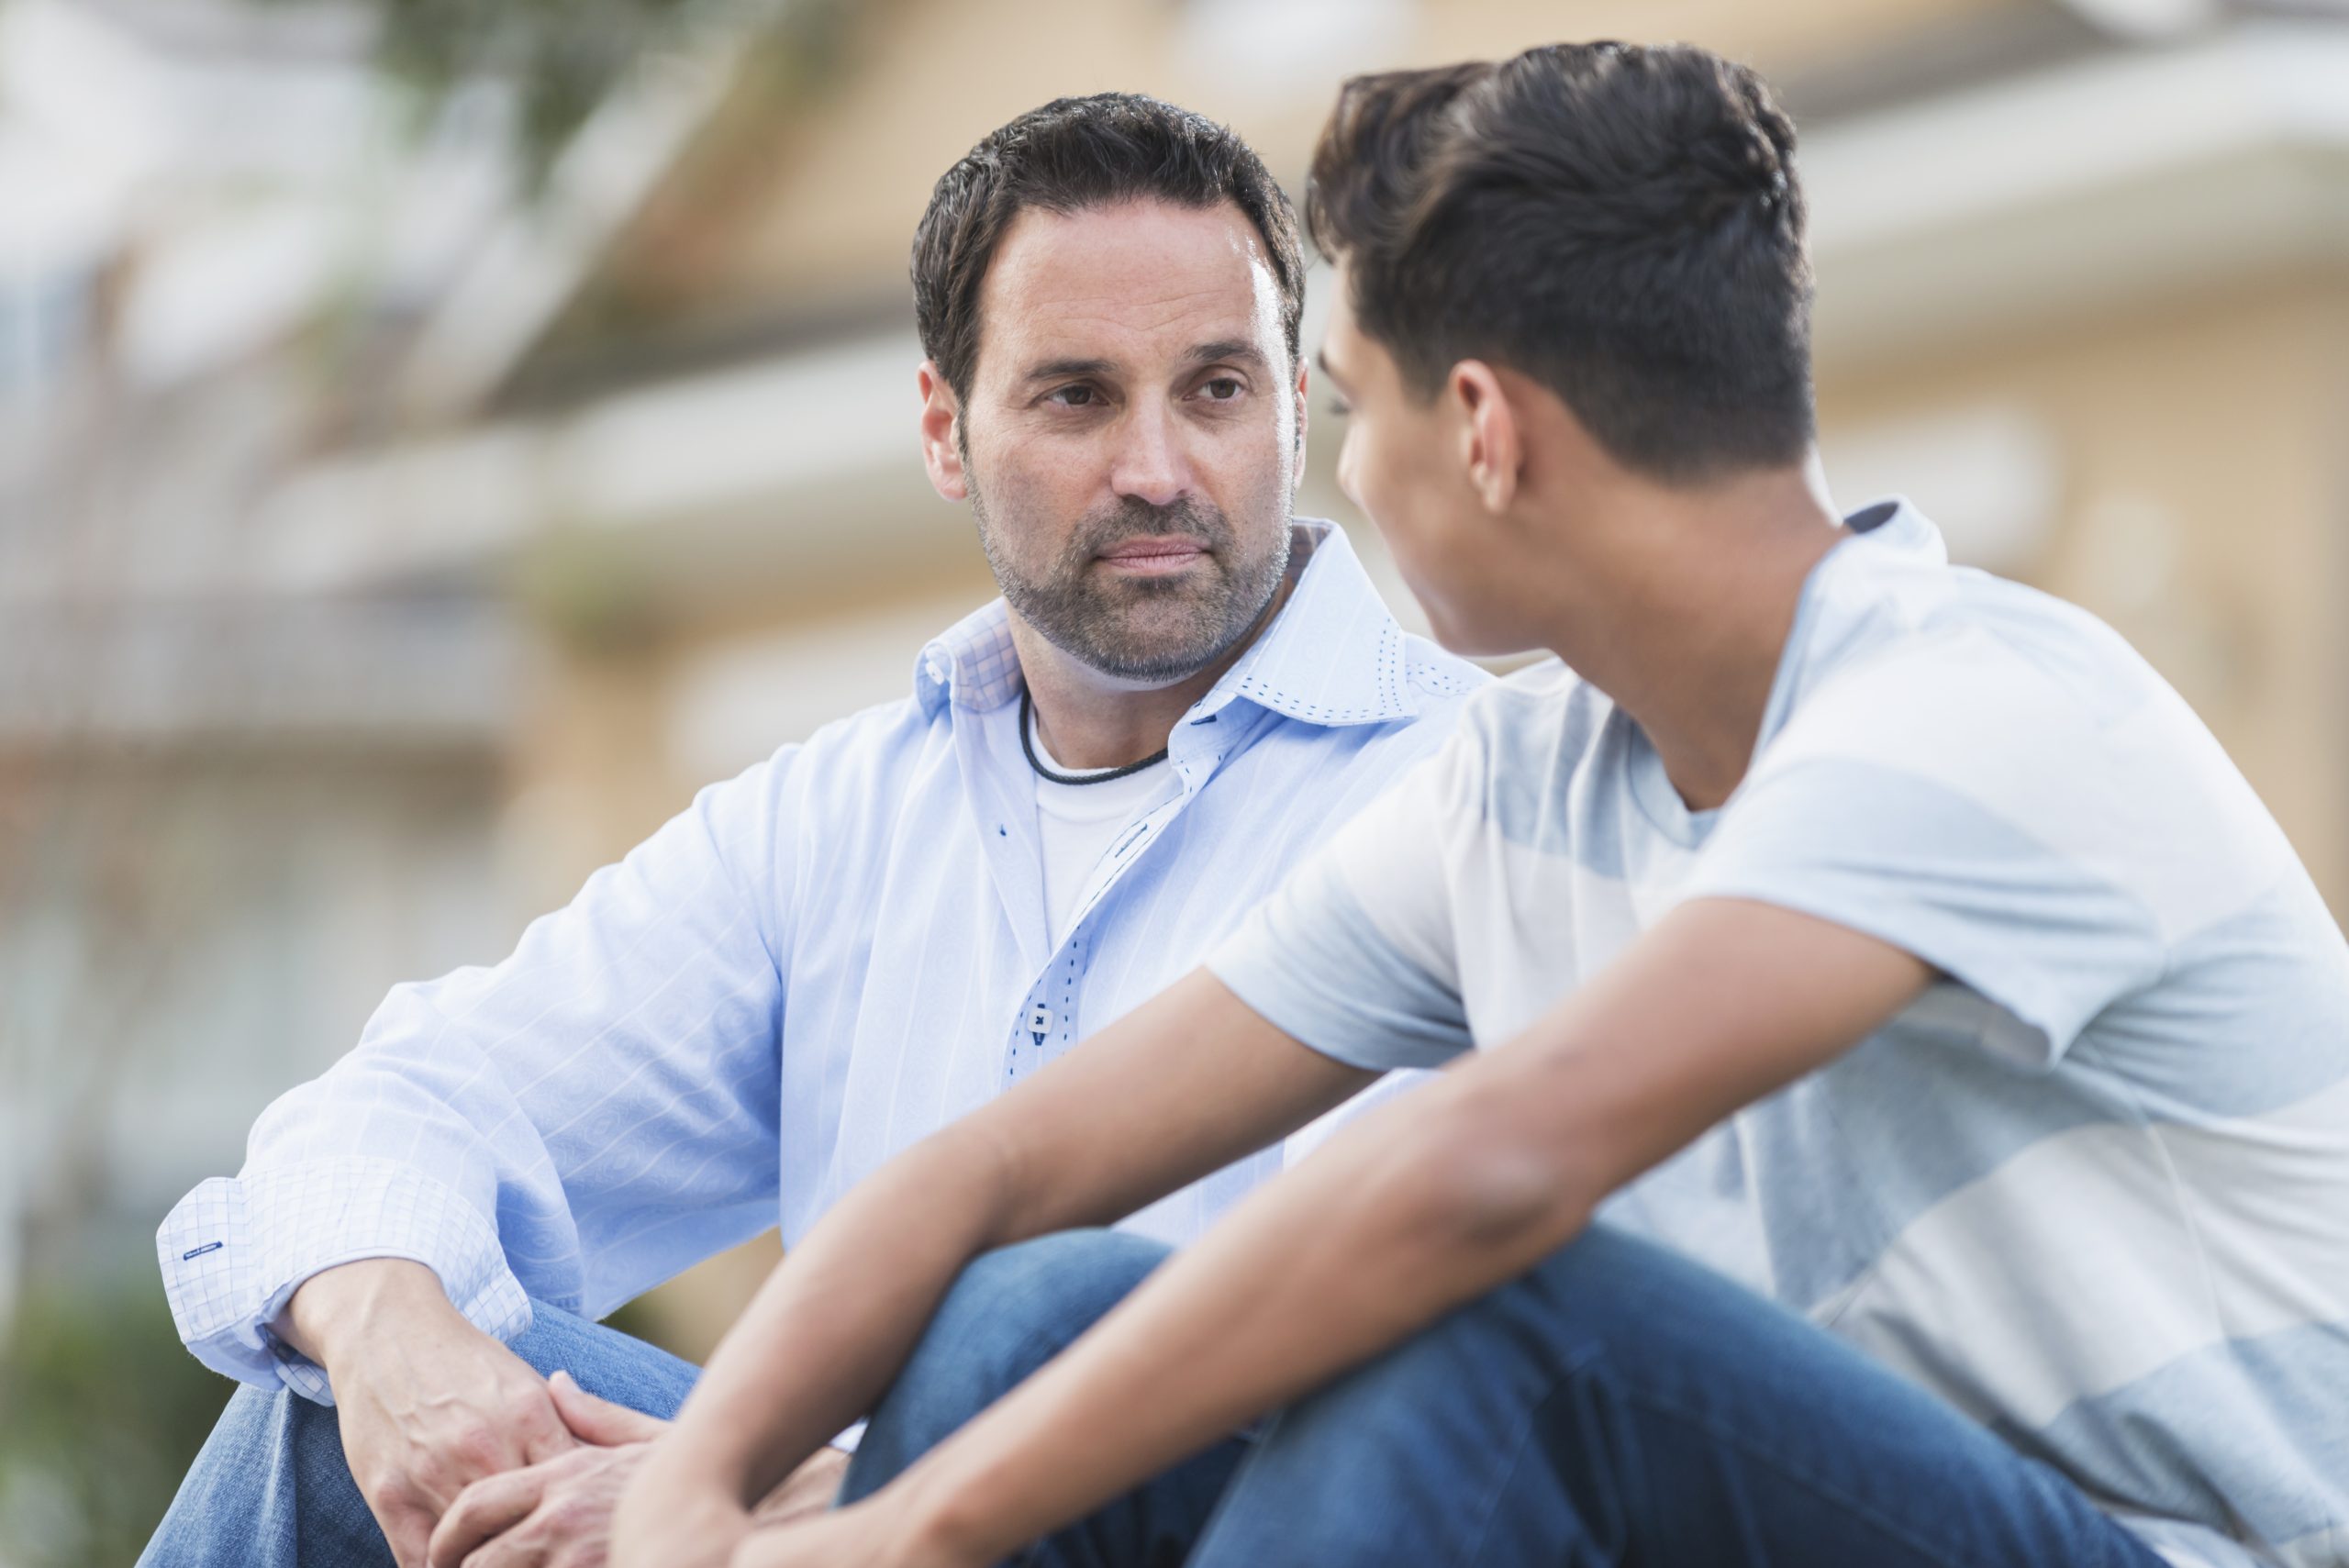 Listen up Parents! Understanding Feelings is Key to Helping Teens Grow Up